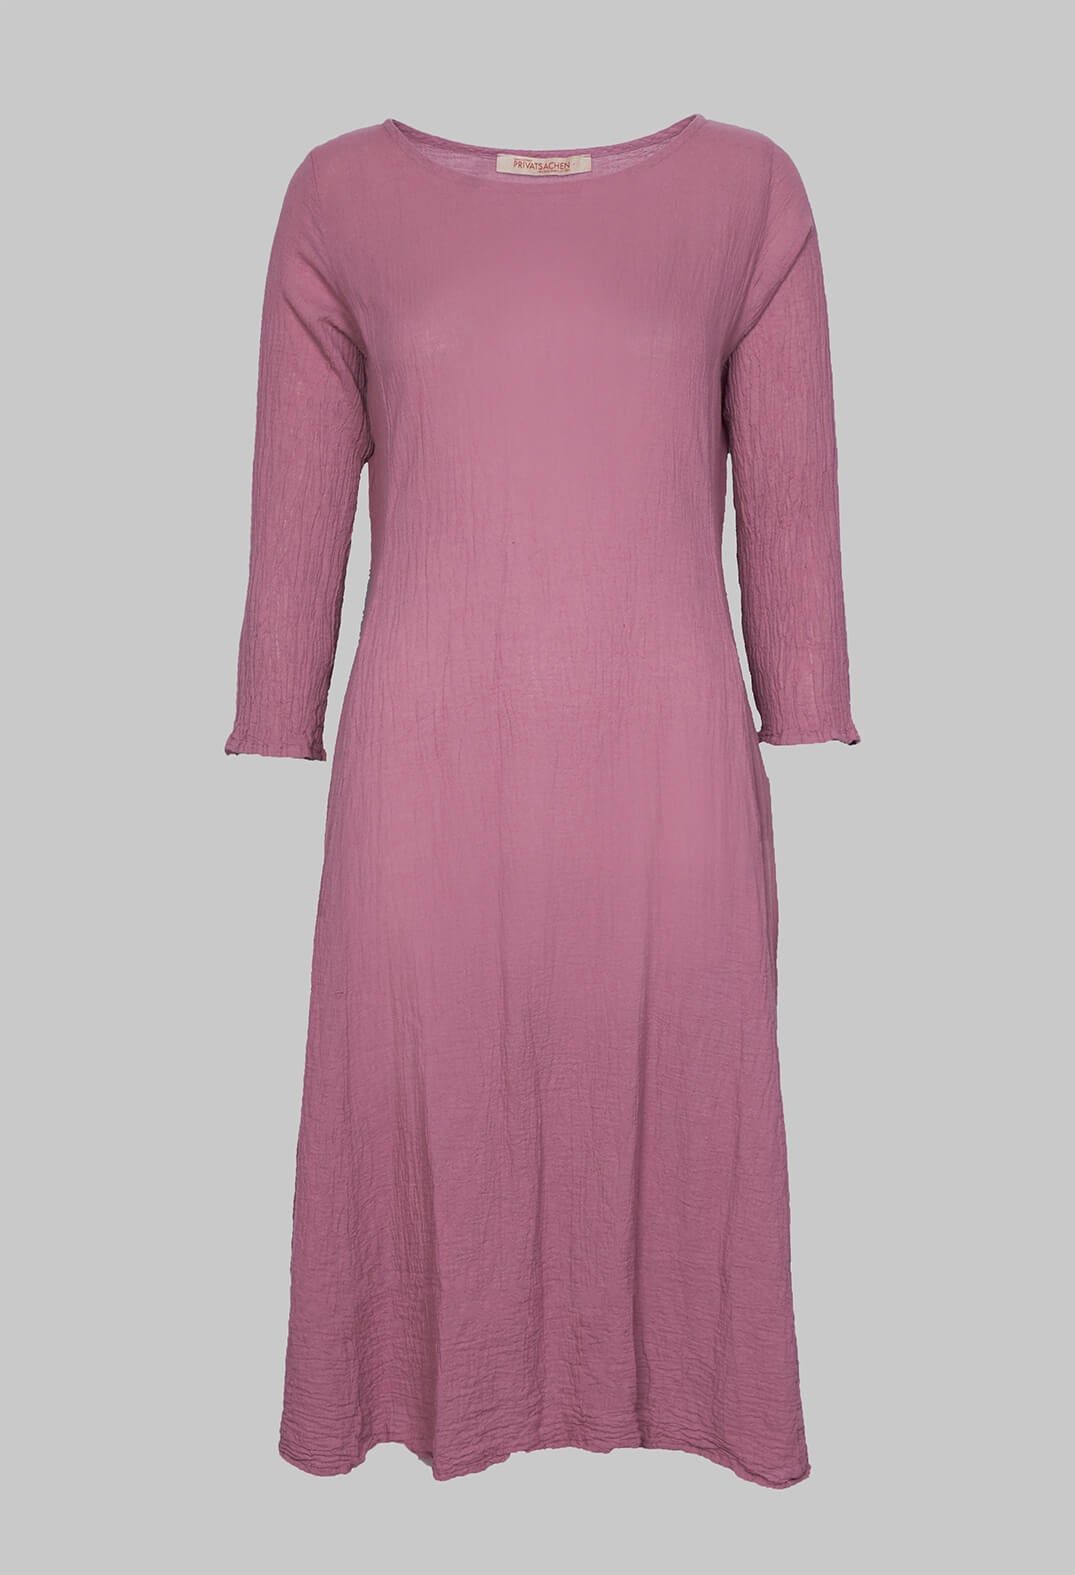 Identater Dress in Rosenholz Pink